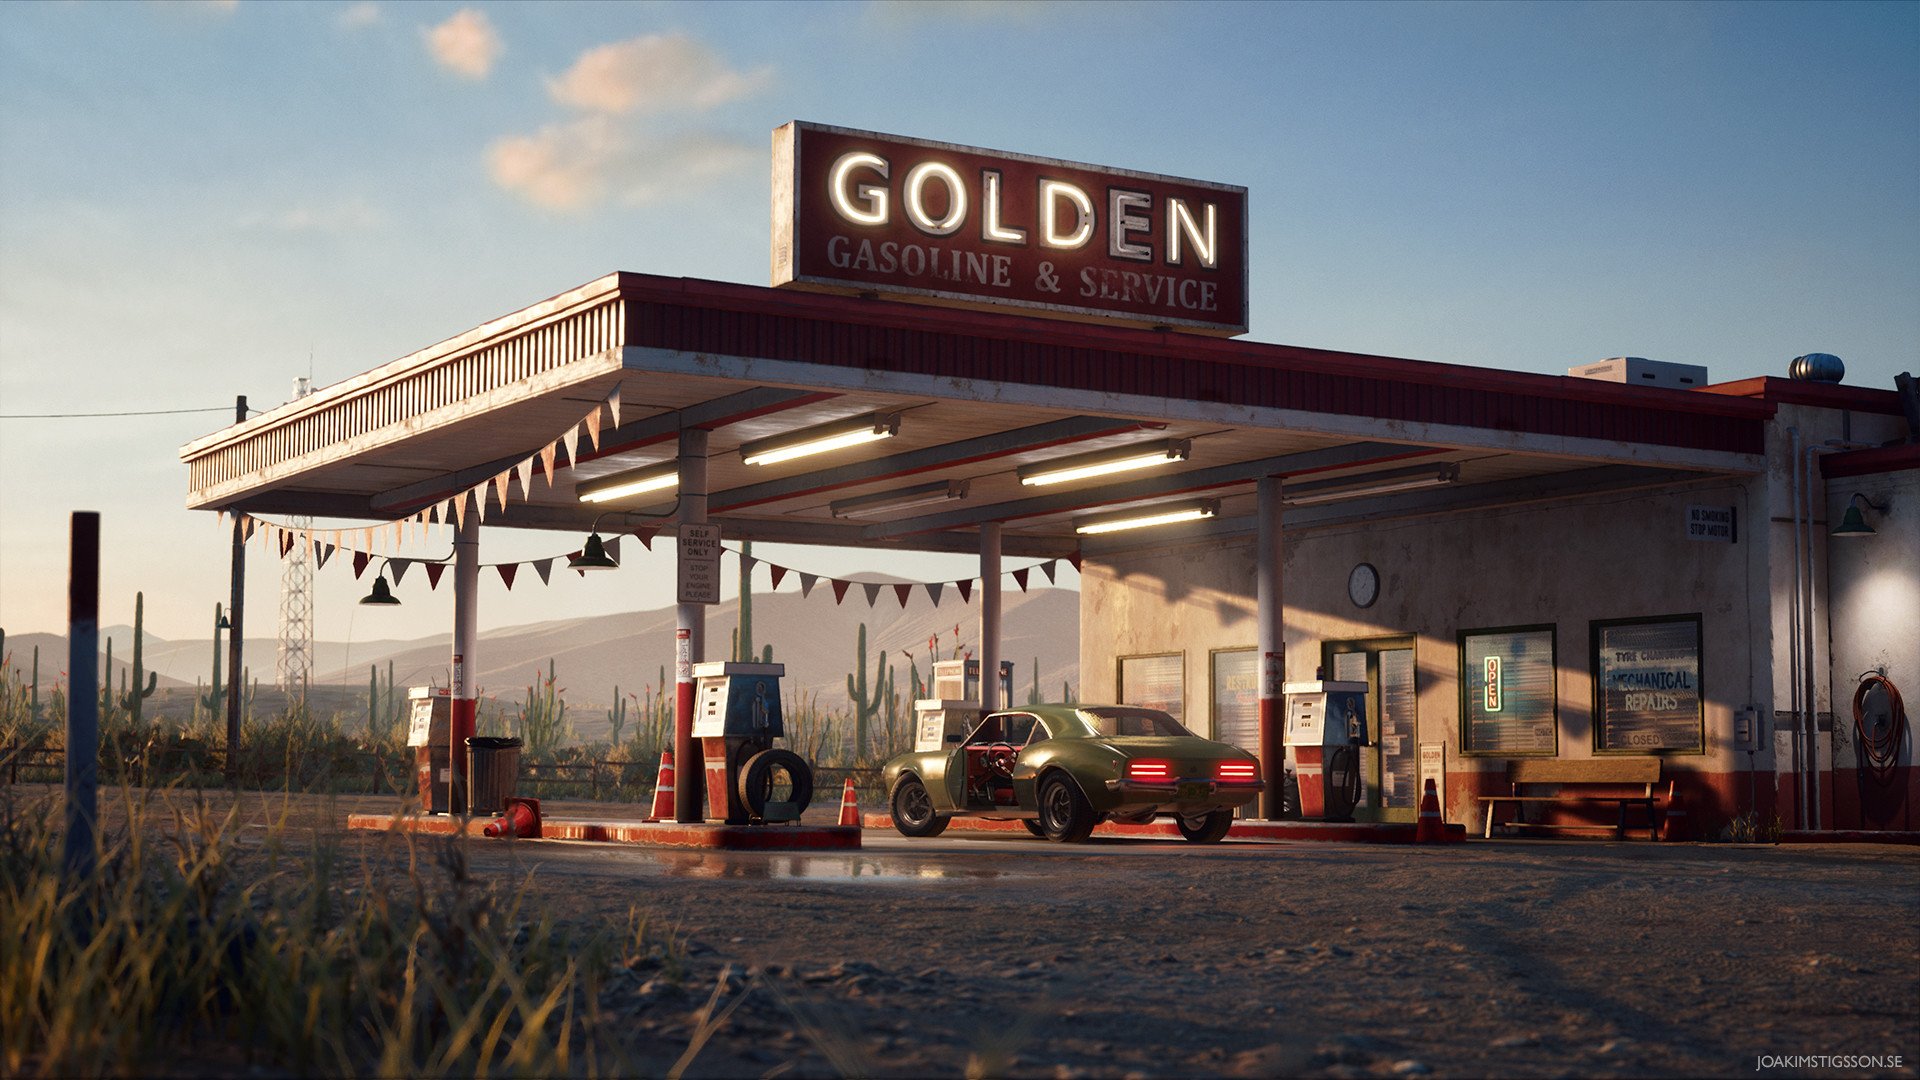 Golden Gasoline Desert Gas Station, HD Artist, 4k Wallpaper, Image, Background, Photo and Picture